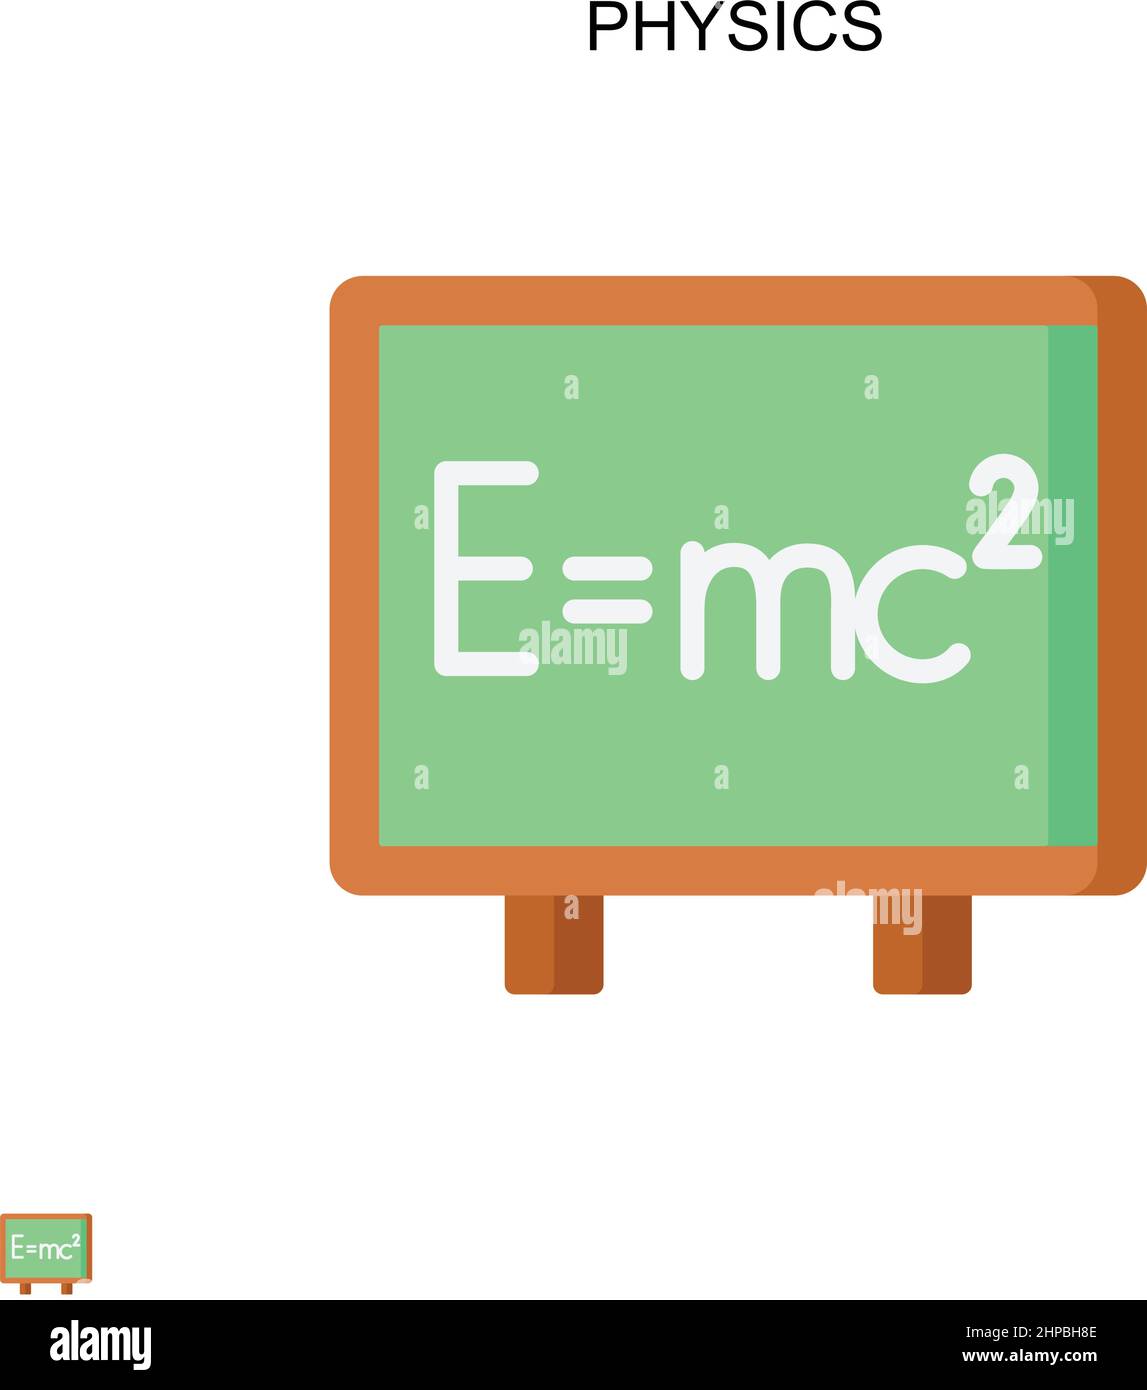 Einfaches Vektorsymbol Physik. Illustration Symbol Design-Vorlage für Web mobile UI-Element. Stock Vektor